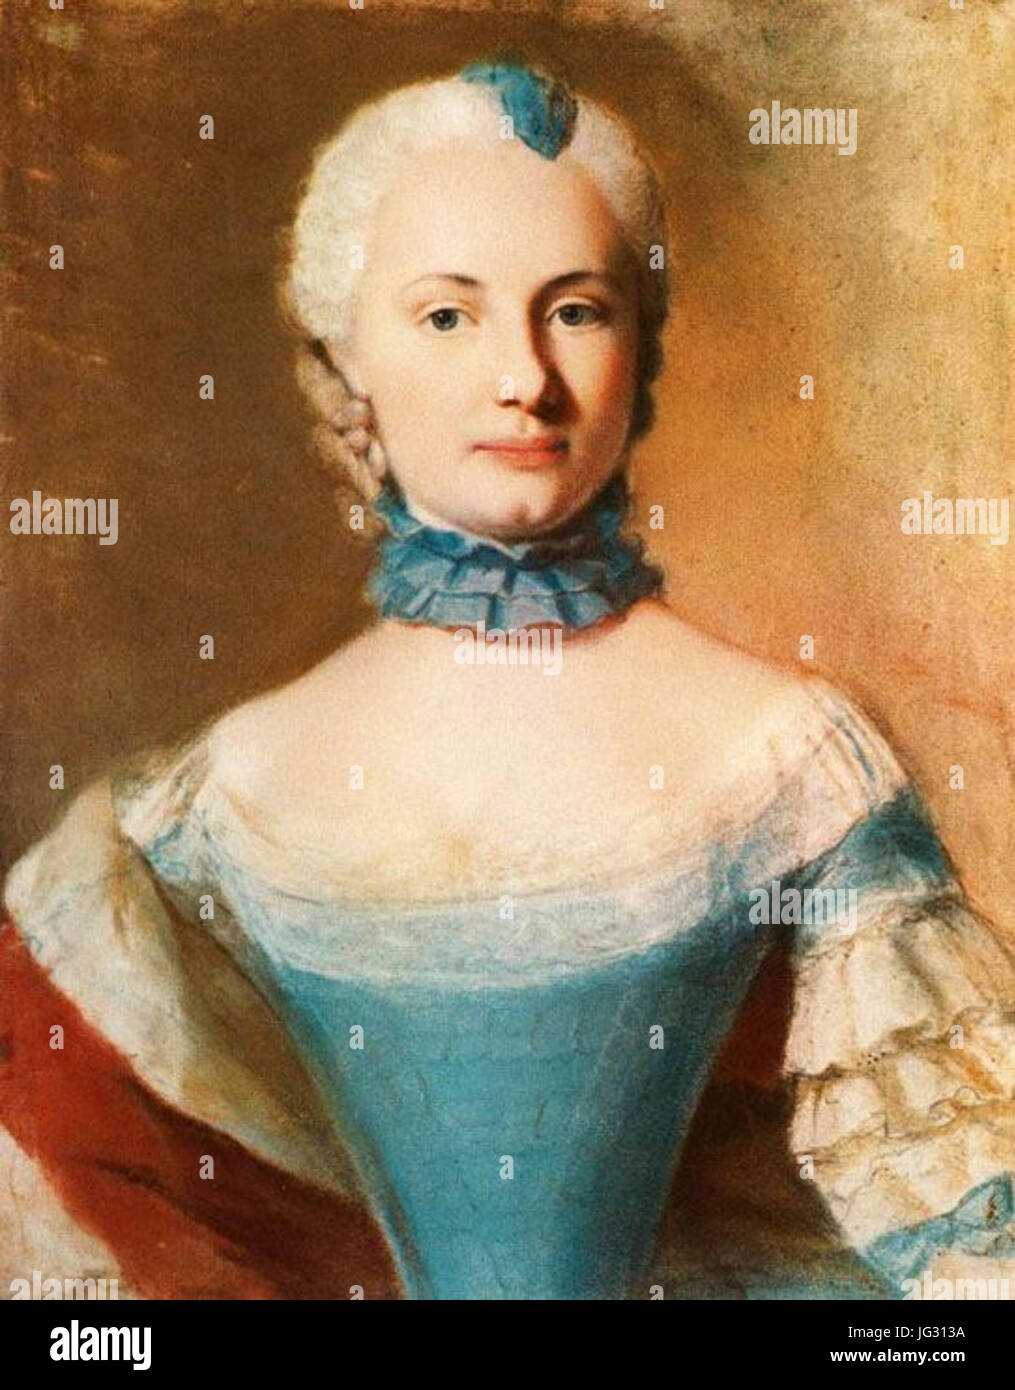 La Duchess Elisabetta Federica Sofia de Württemberg Stock Photo